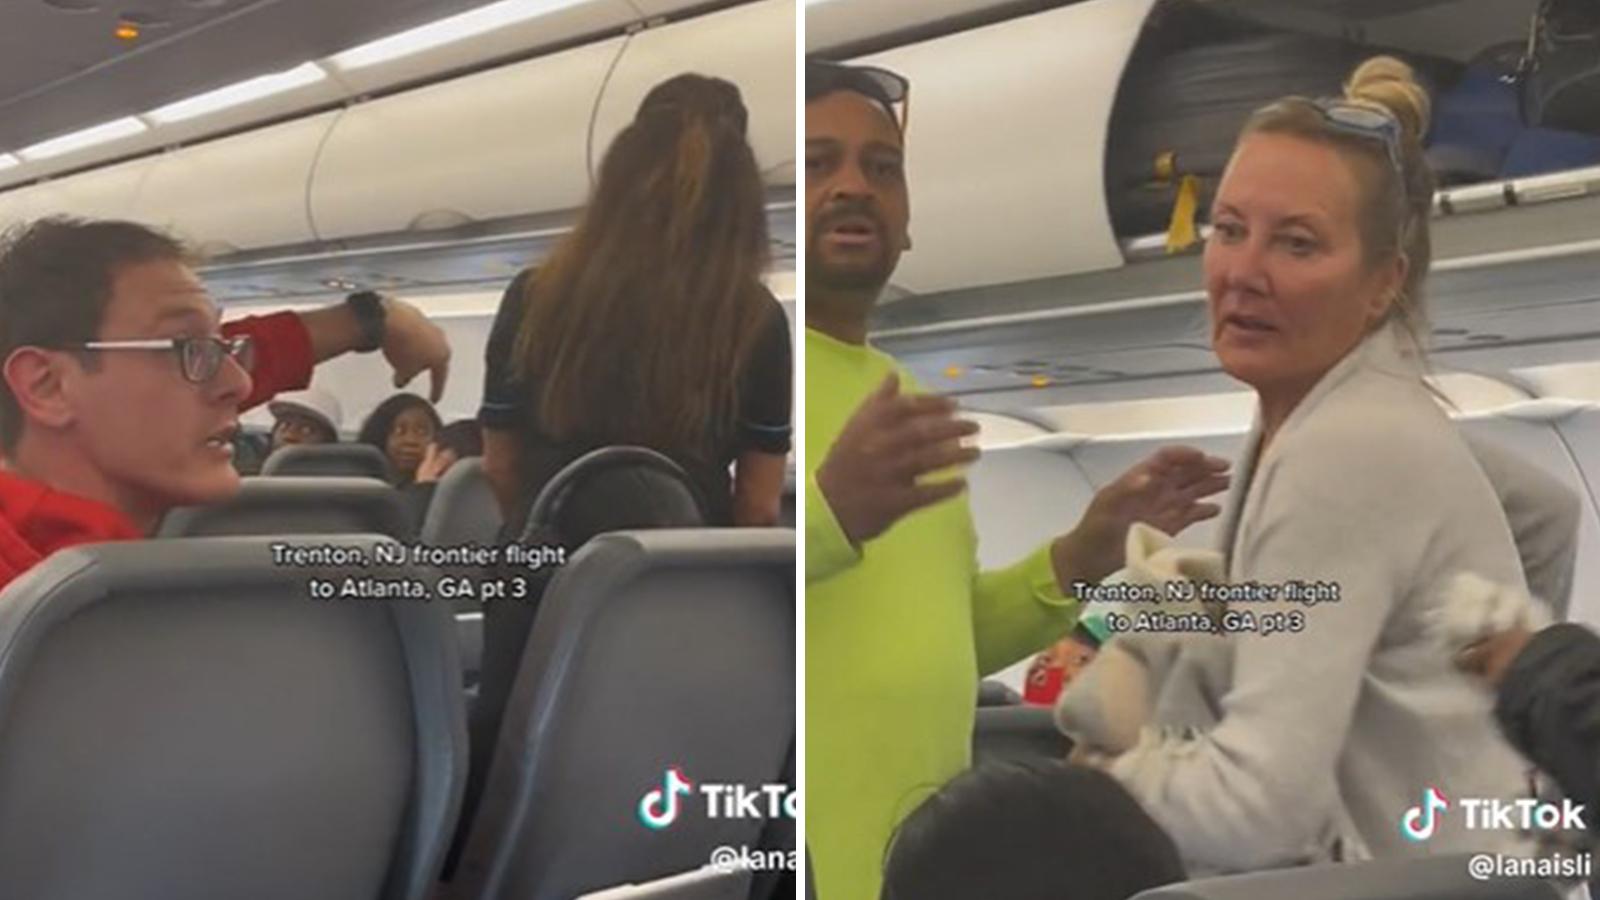 passengers vote to kick woman off plane